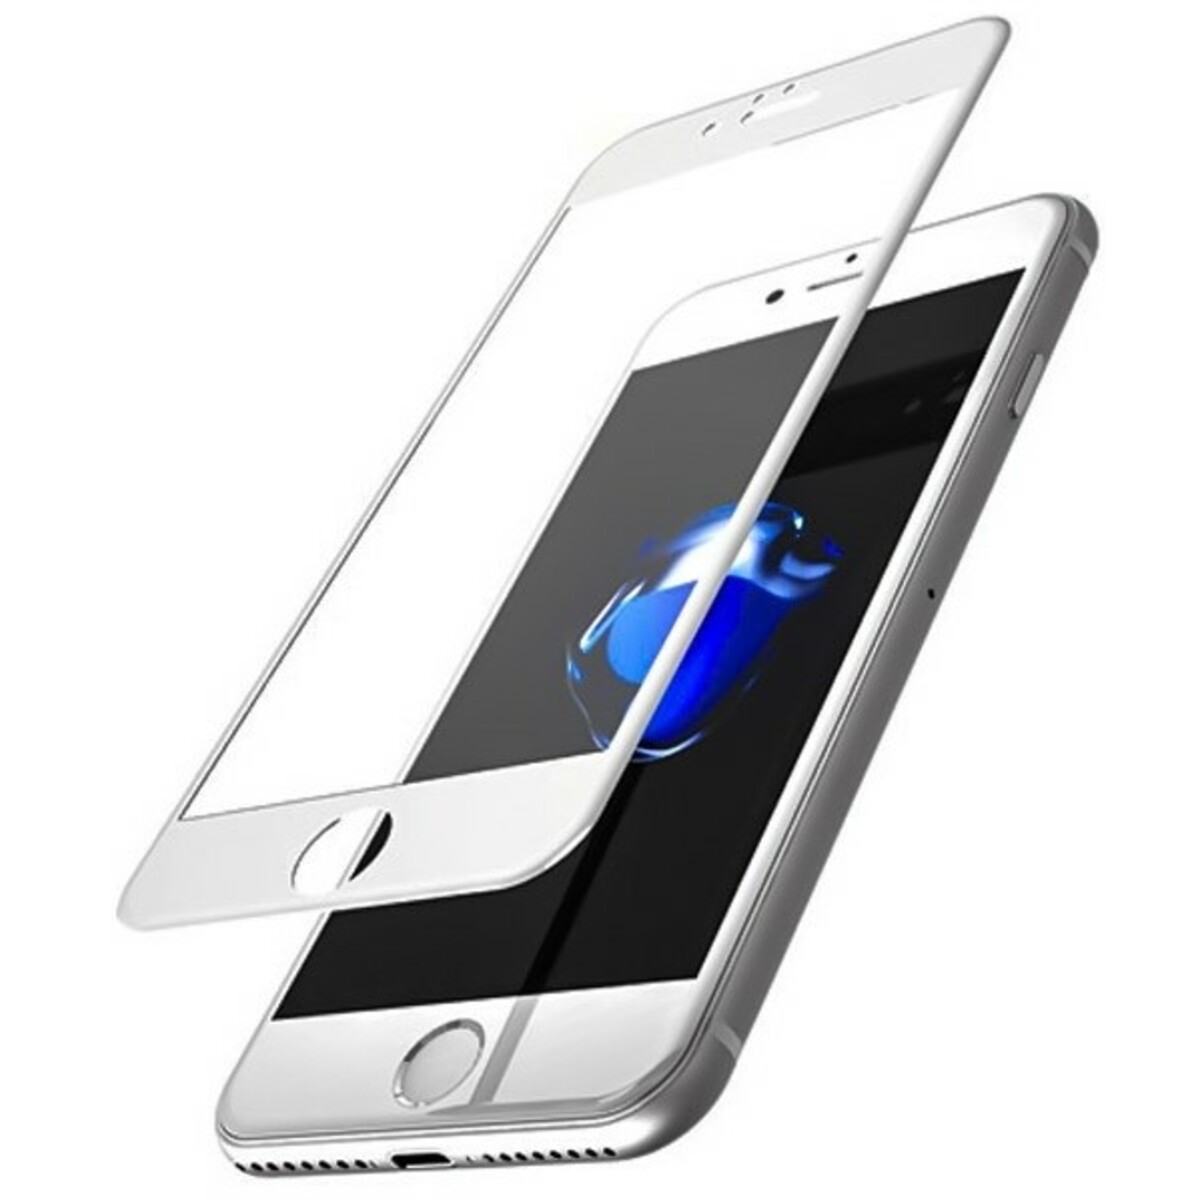 Защитное стекло Devia Eagle Eye Anti-Glare Full Screen 0.26mm для смартфона iPhone 7/8, белый